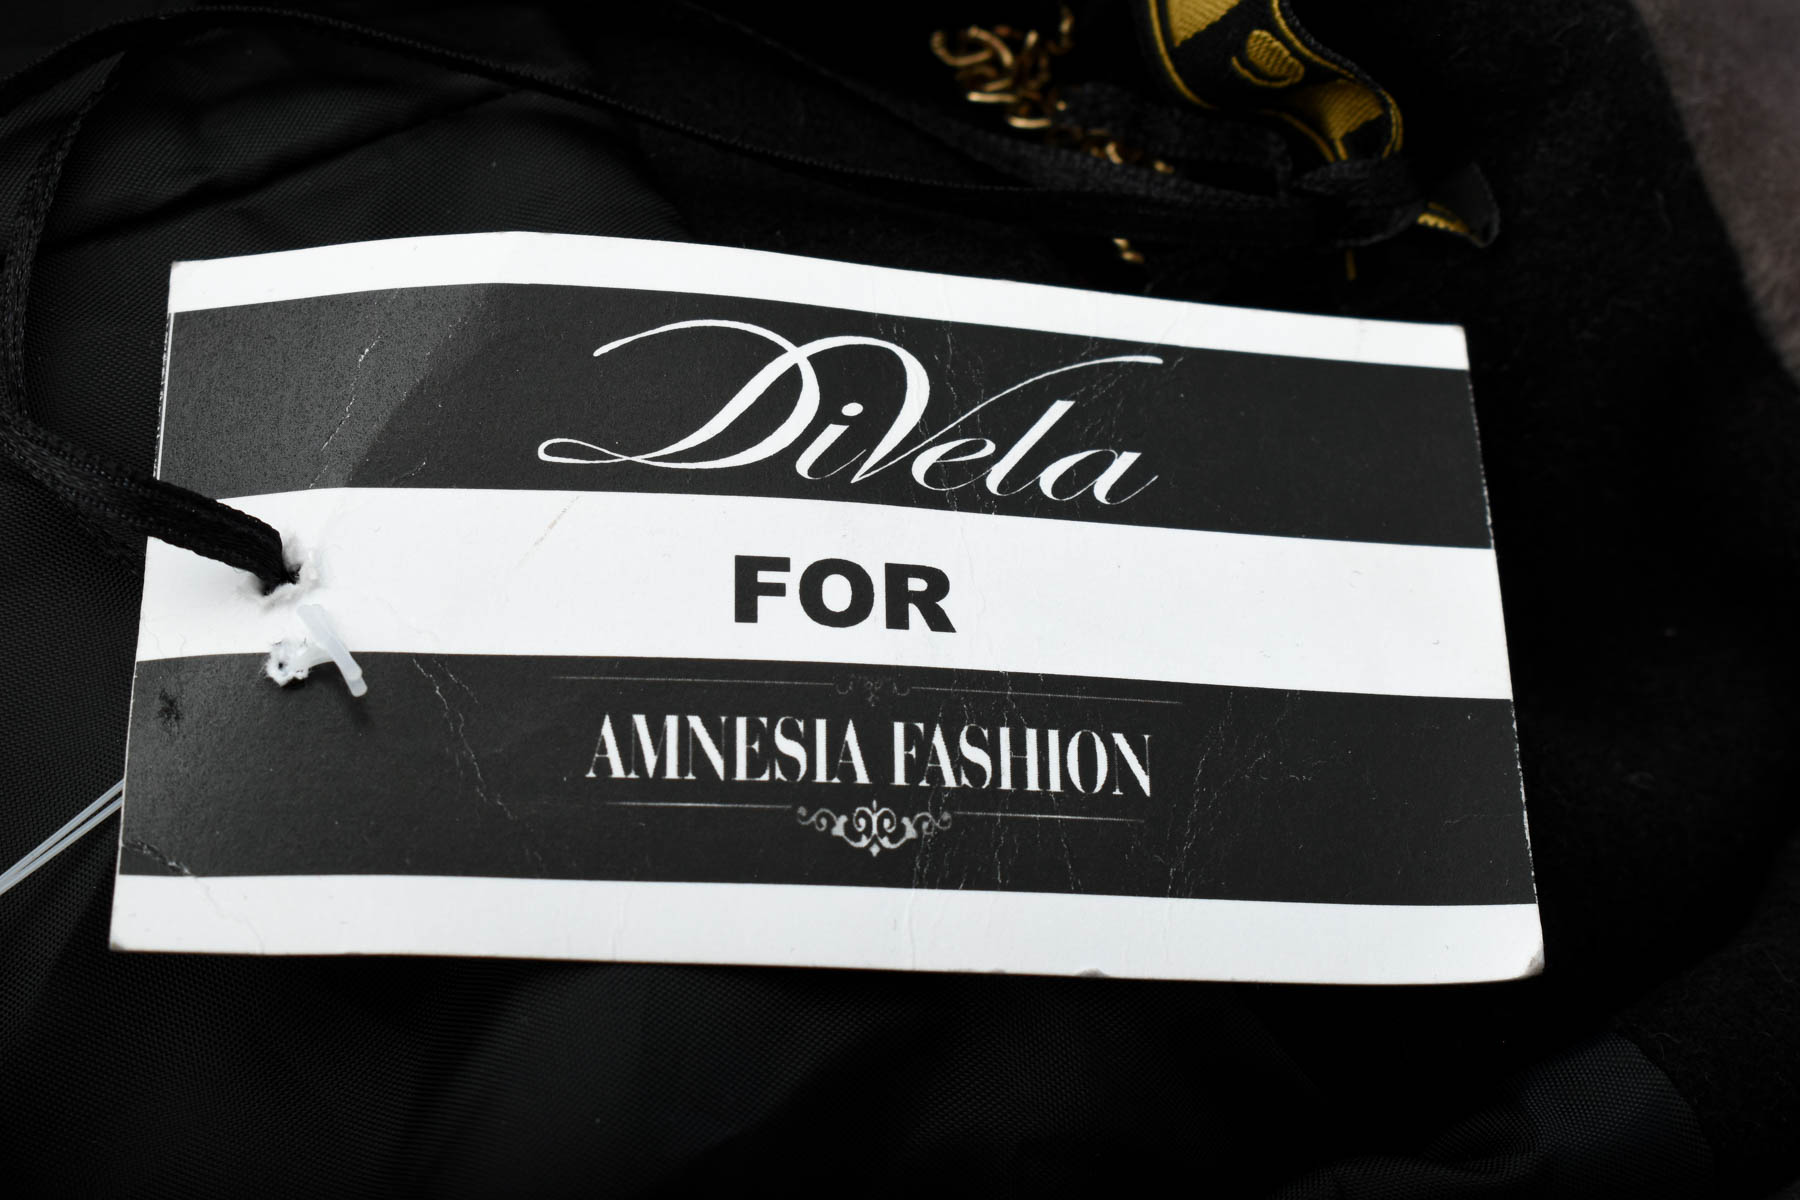 Palton de damă - DiVela for Amnesia Fashion - 2